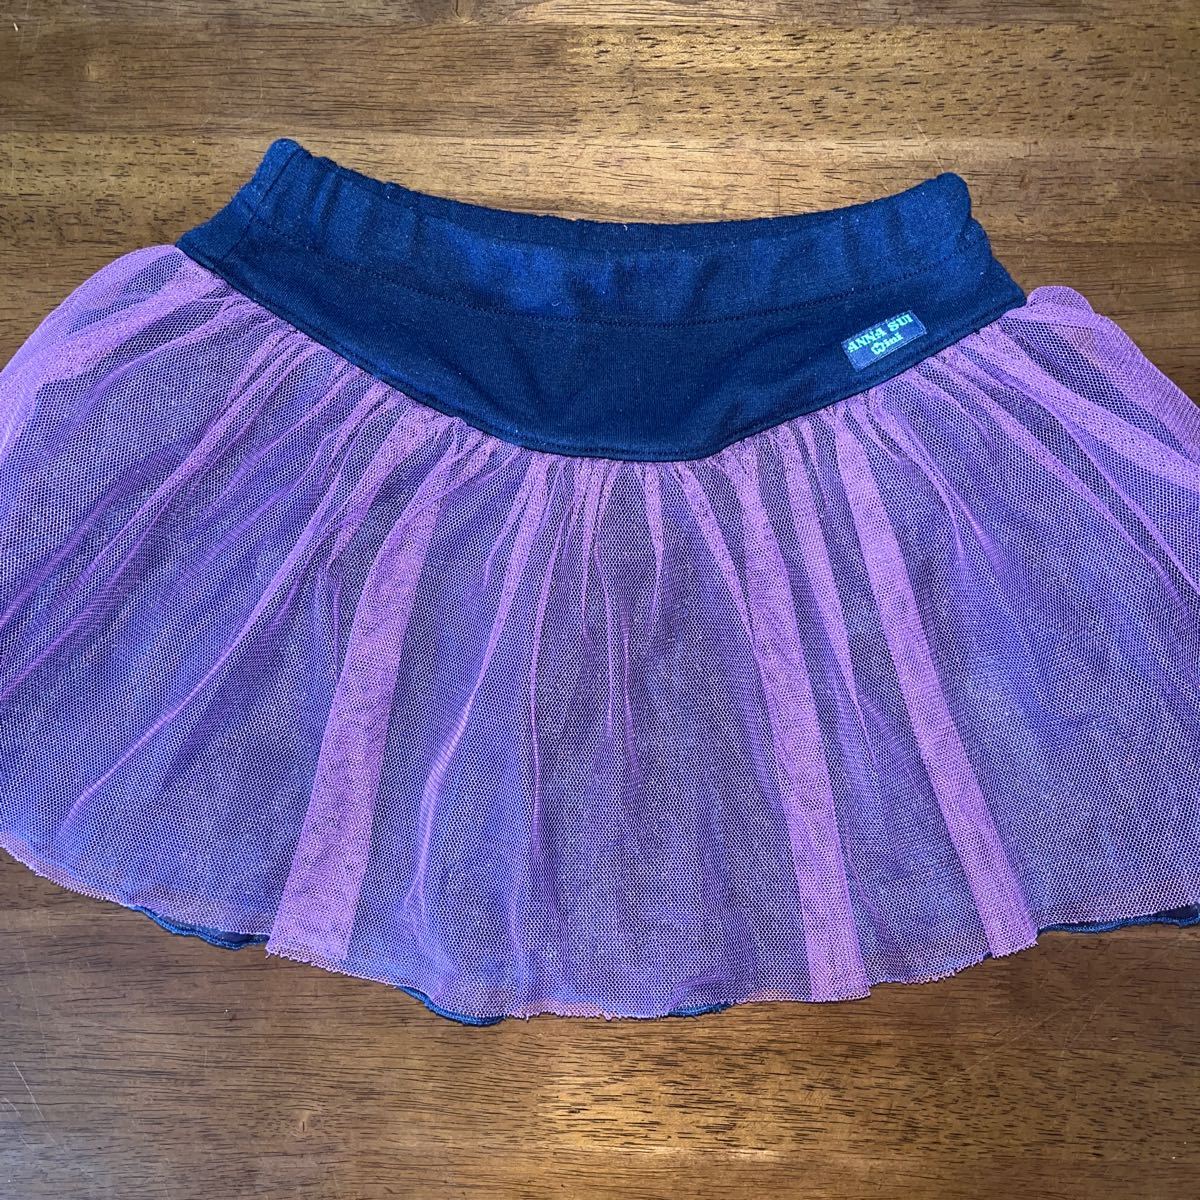 ANNA SUI mini| Anna Sui Mini ] short sleeves T-shirt chu-ru attaching skirt / ska bread 2 pieces set 130. used black × purple 